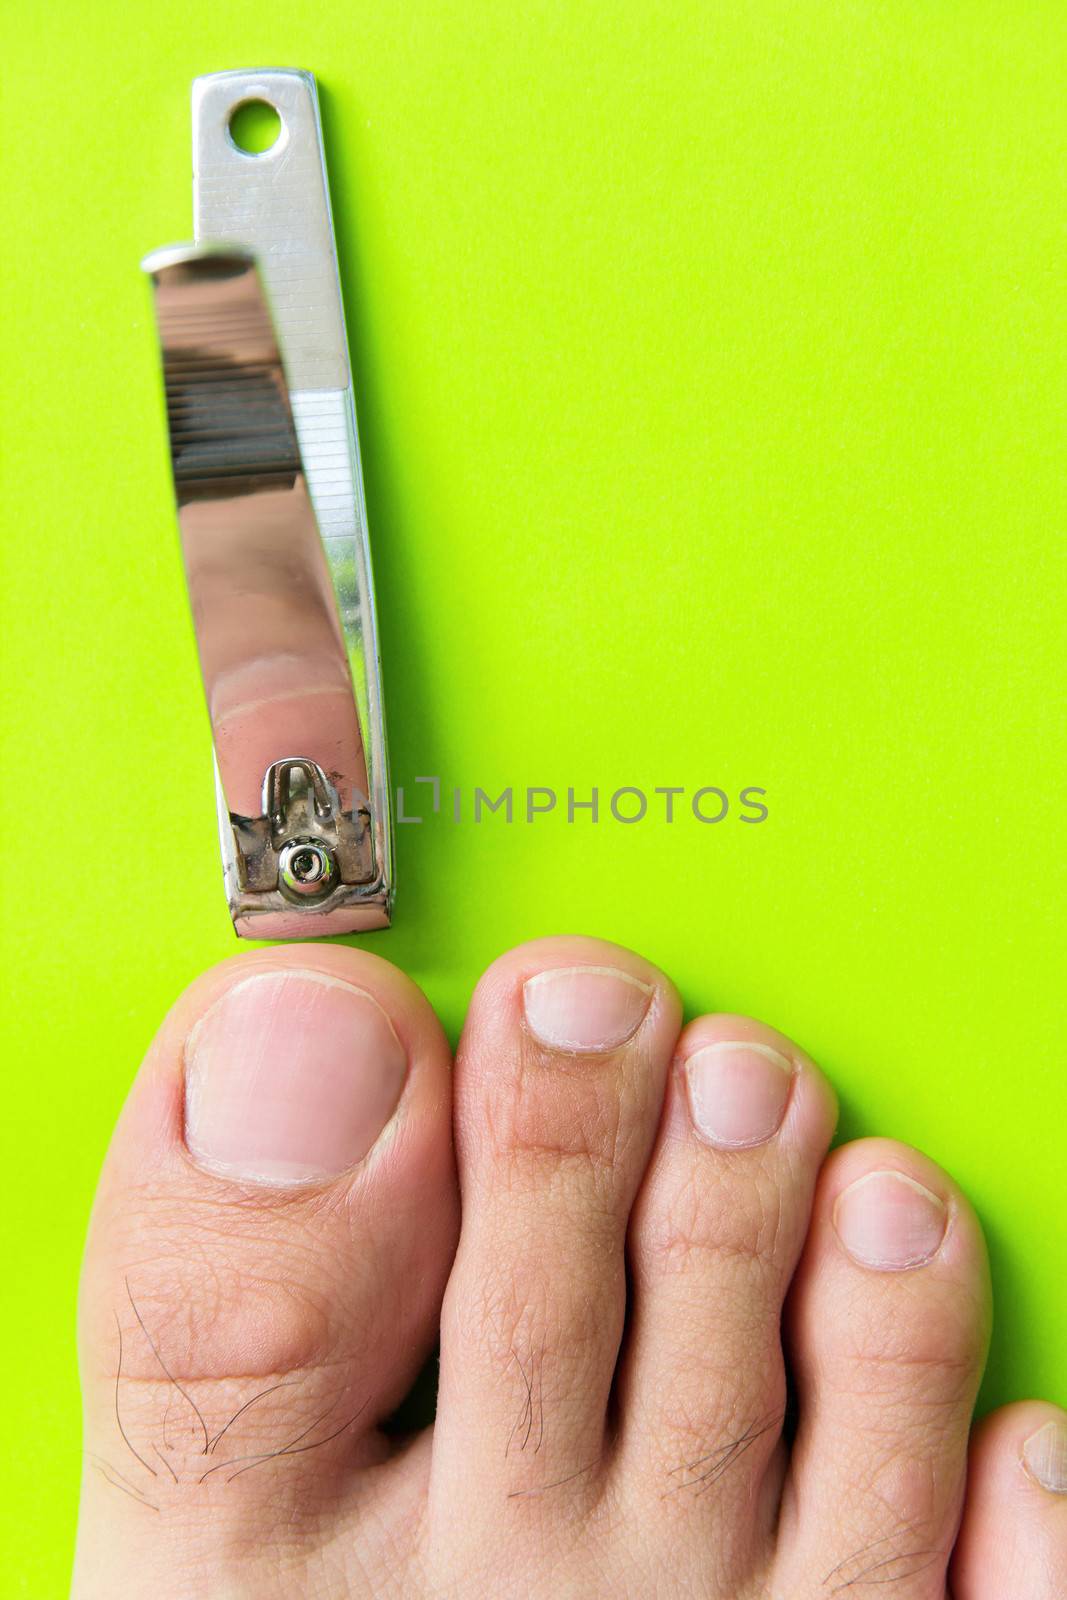 cutting your toenails concept